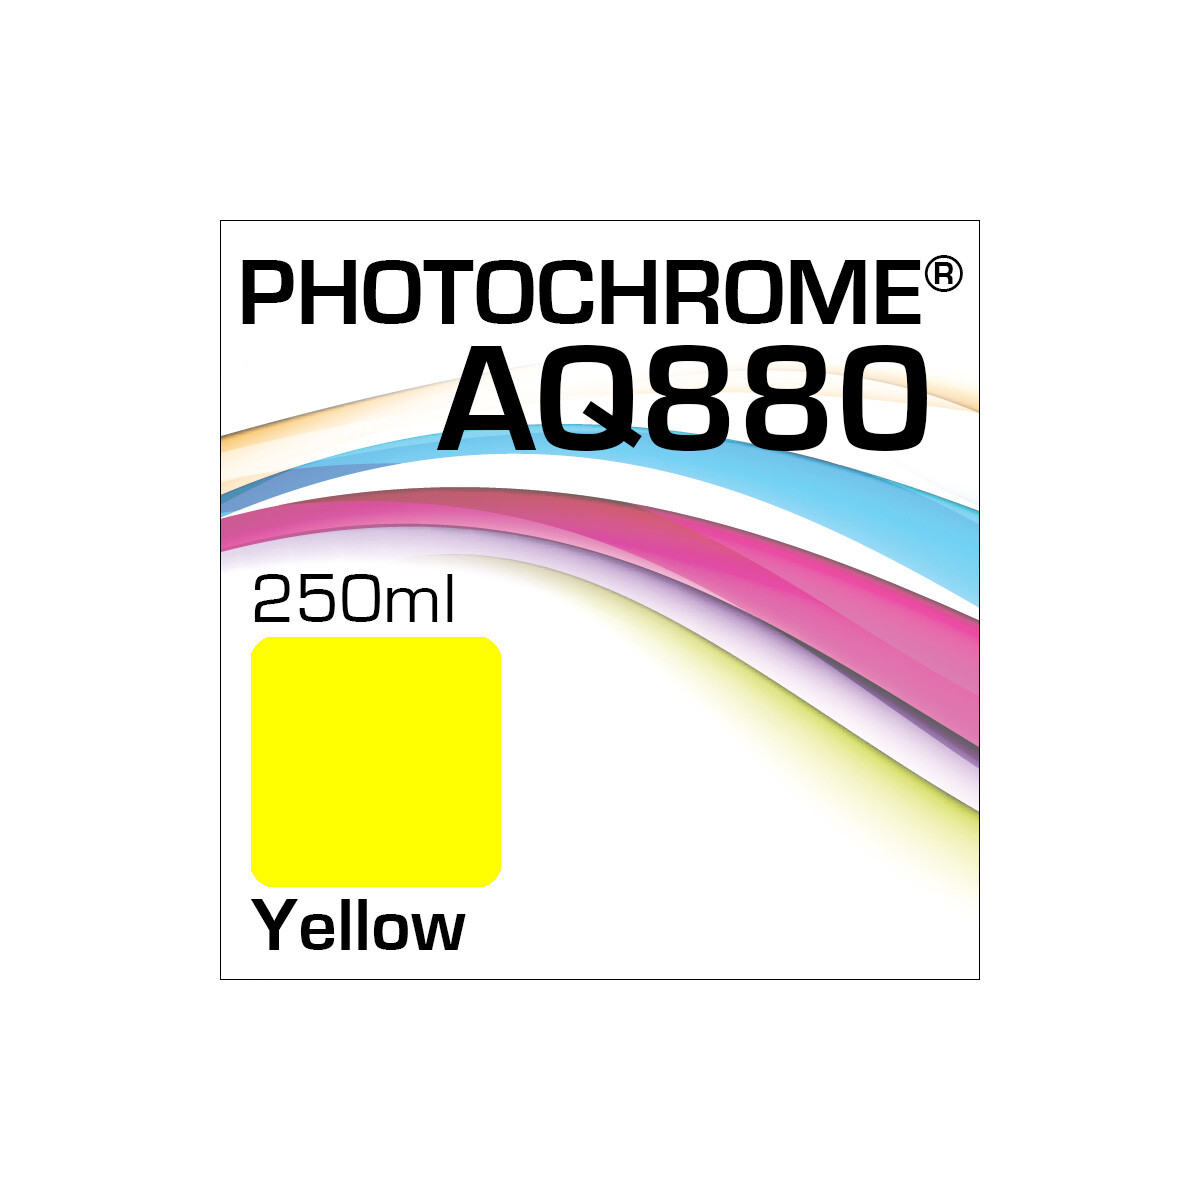 Lyson Photochrome AQ880 Bottle Yellow 250ml (EOL)